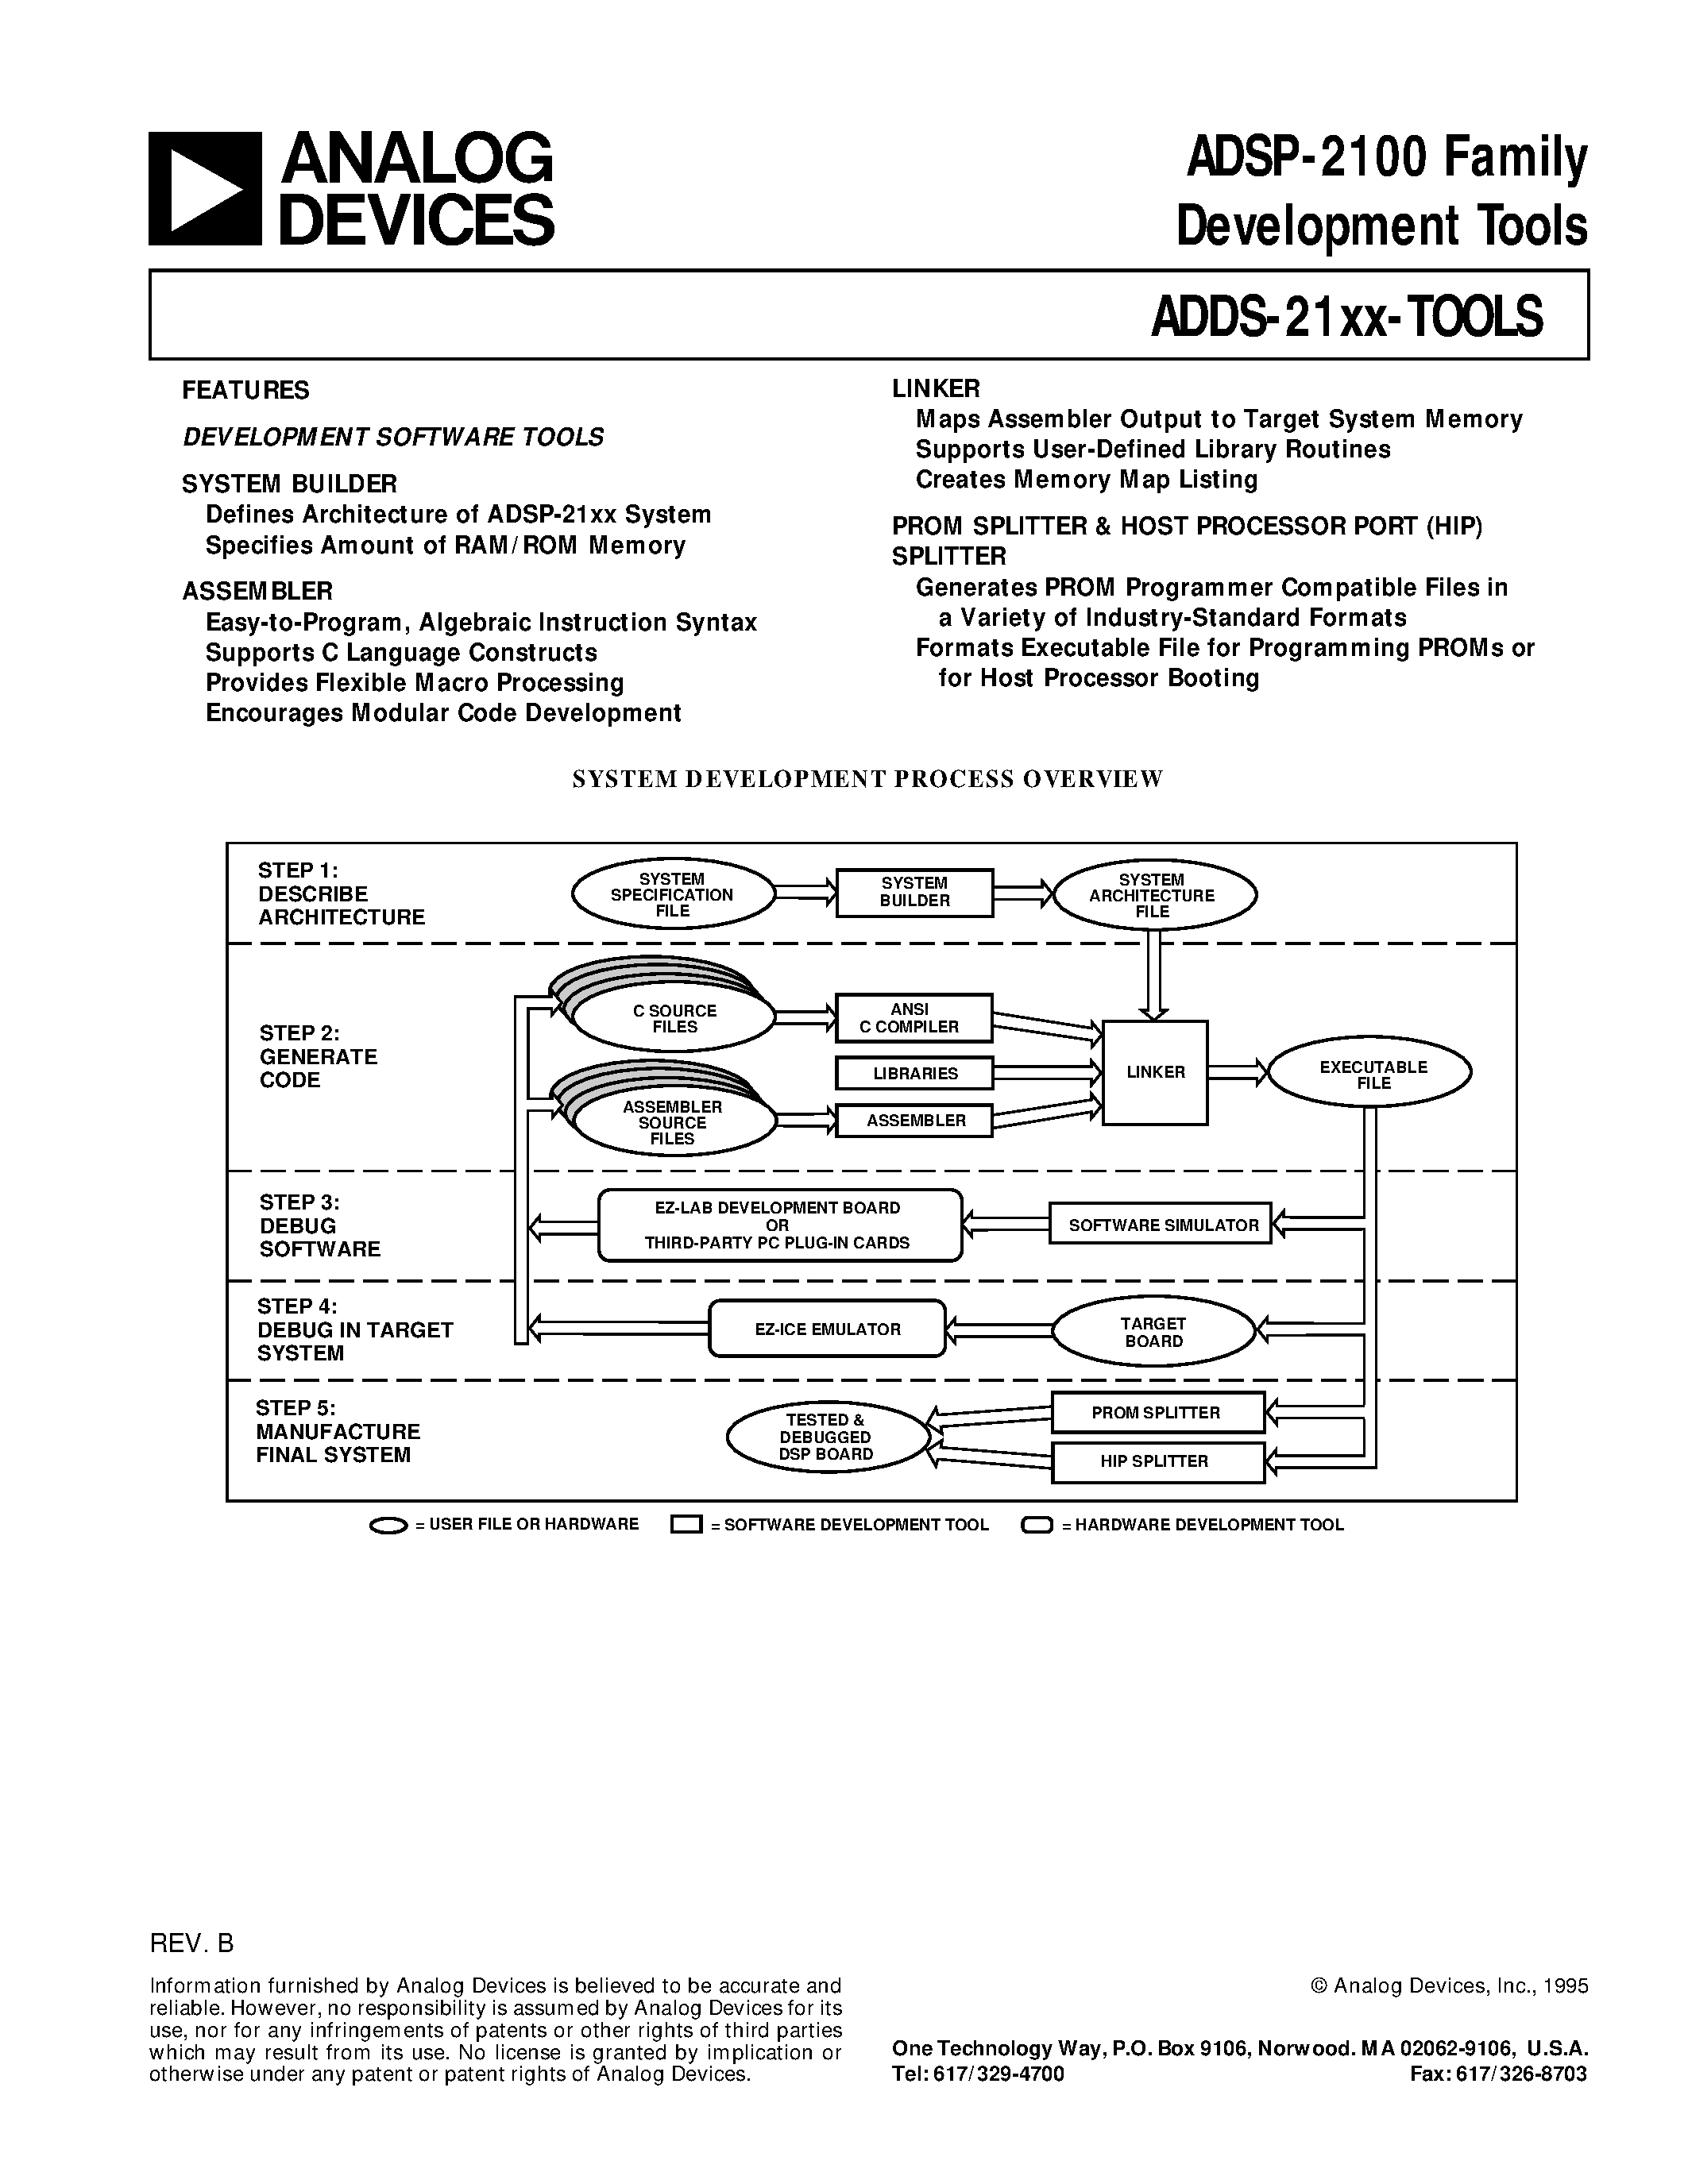 Datasheet ADDS-21XX-EZLITE - ADSP-2100 Family Development Tools page 1